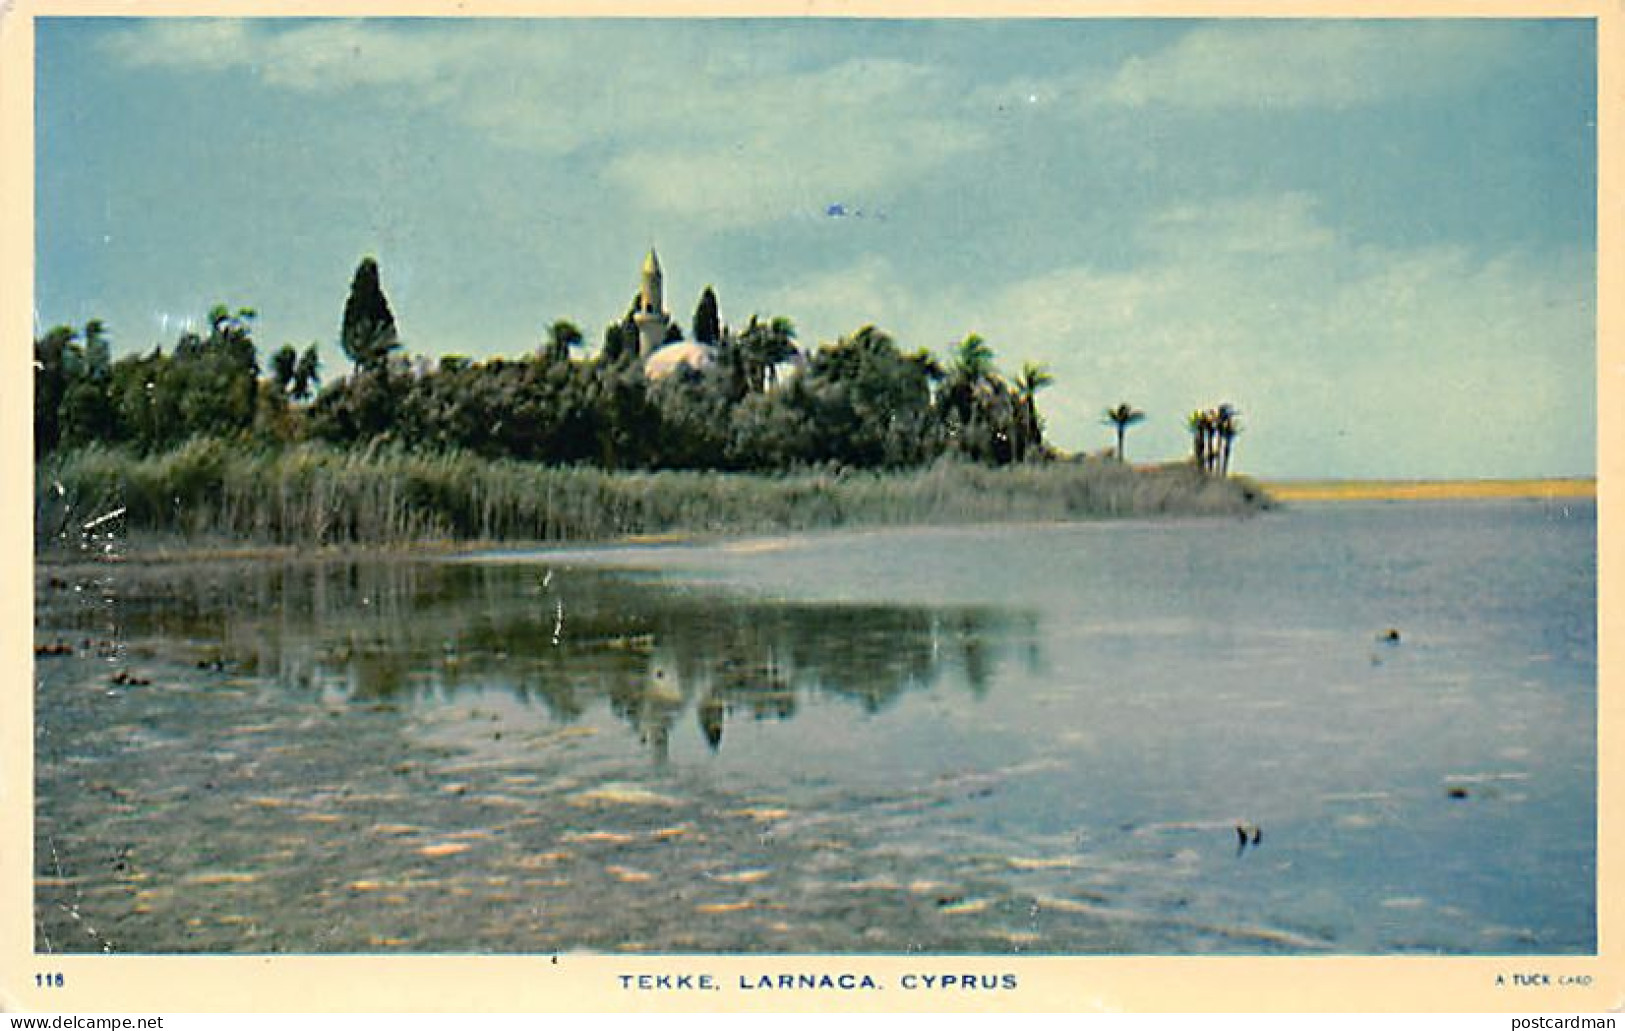 Cyprus - LARNACA - Tekke - Publ. A. Tuck 118 - Chypre